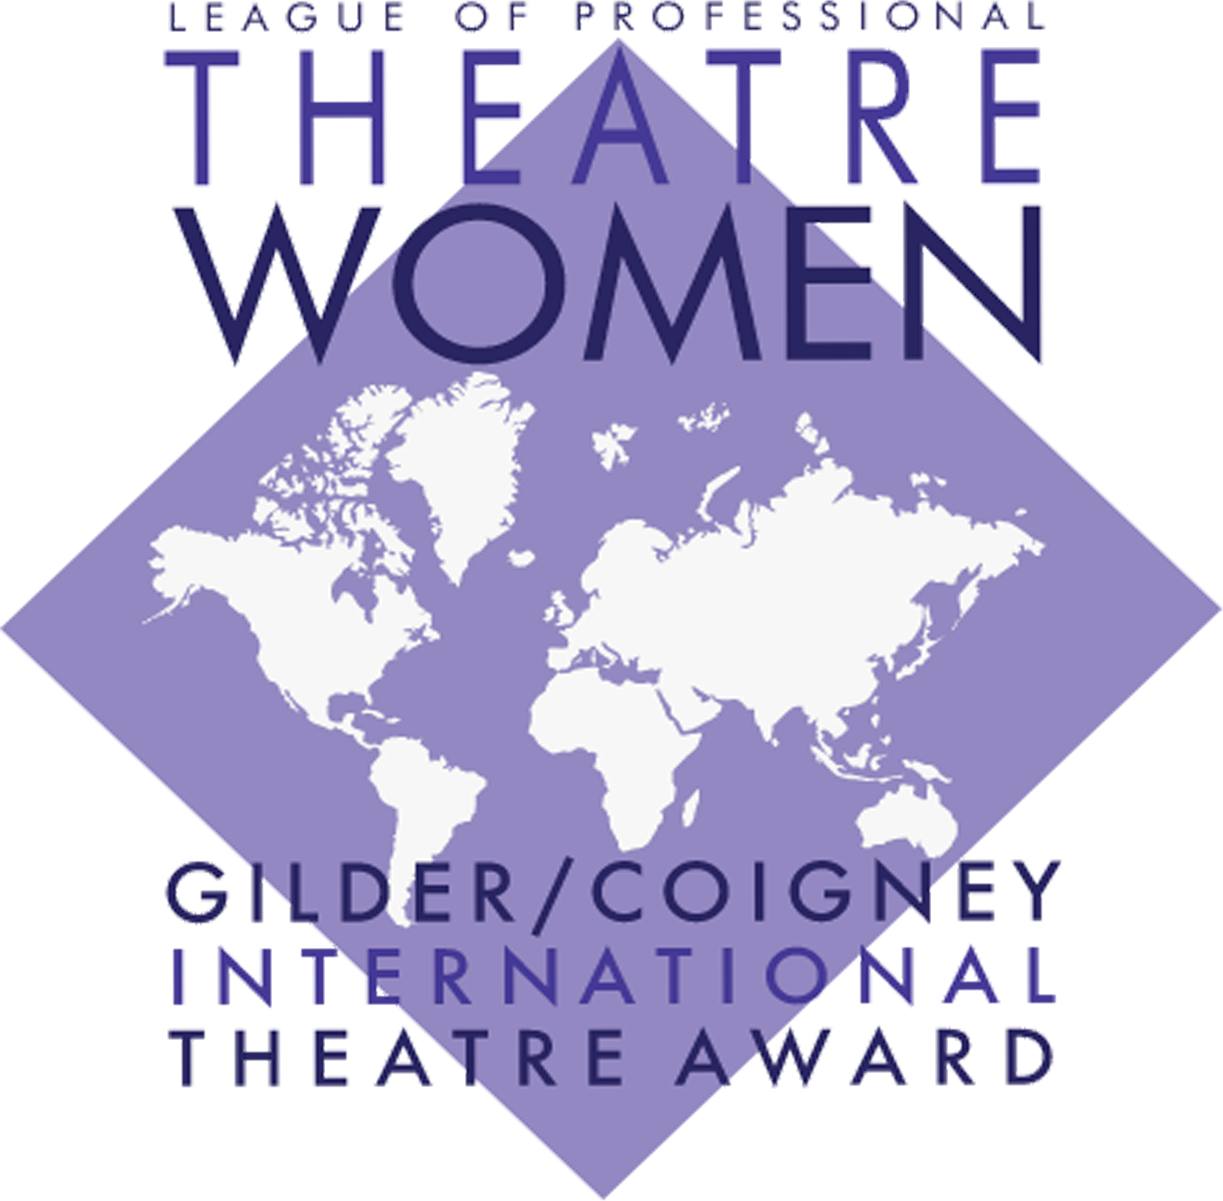 LPTW Gilder/Coigney International Theatre Award